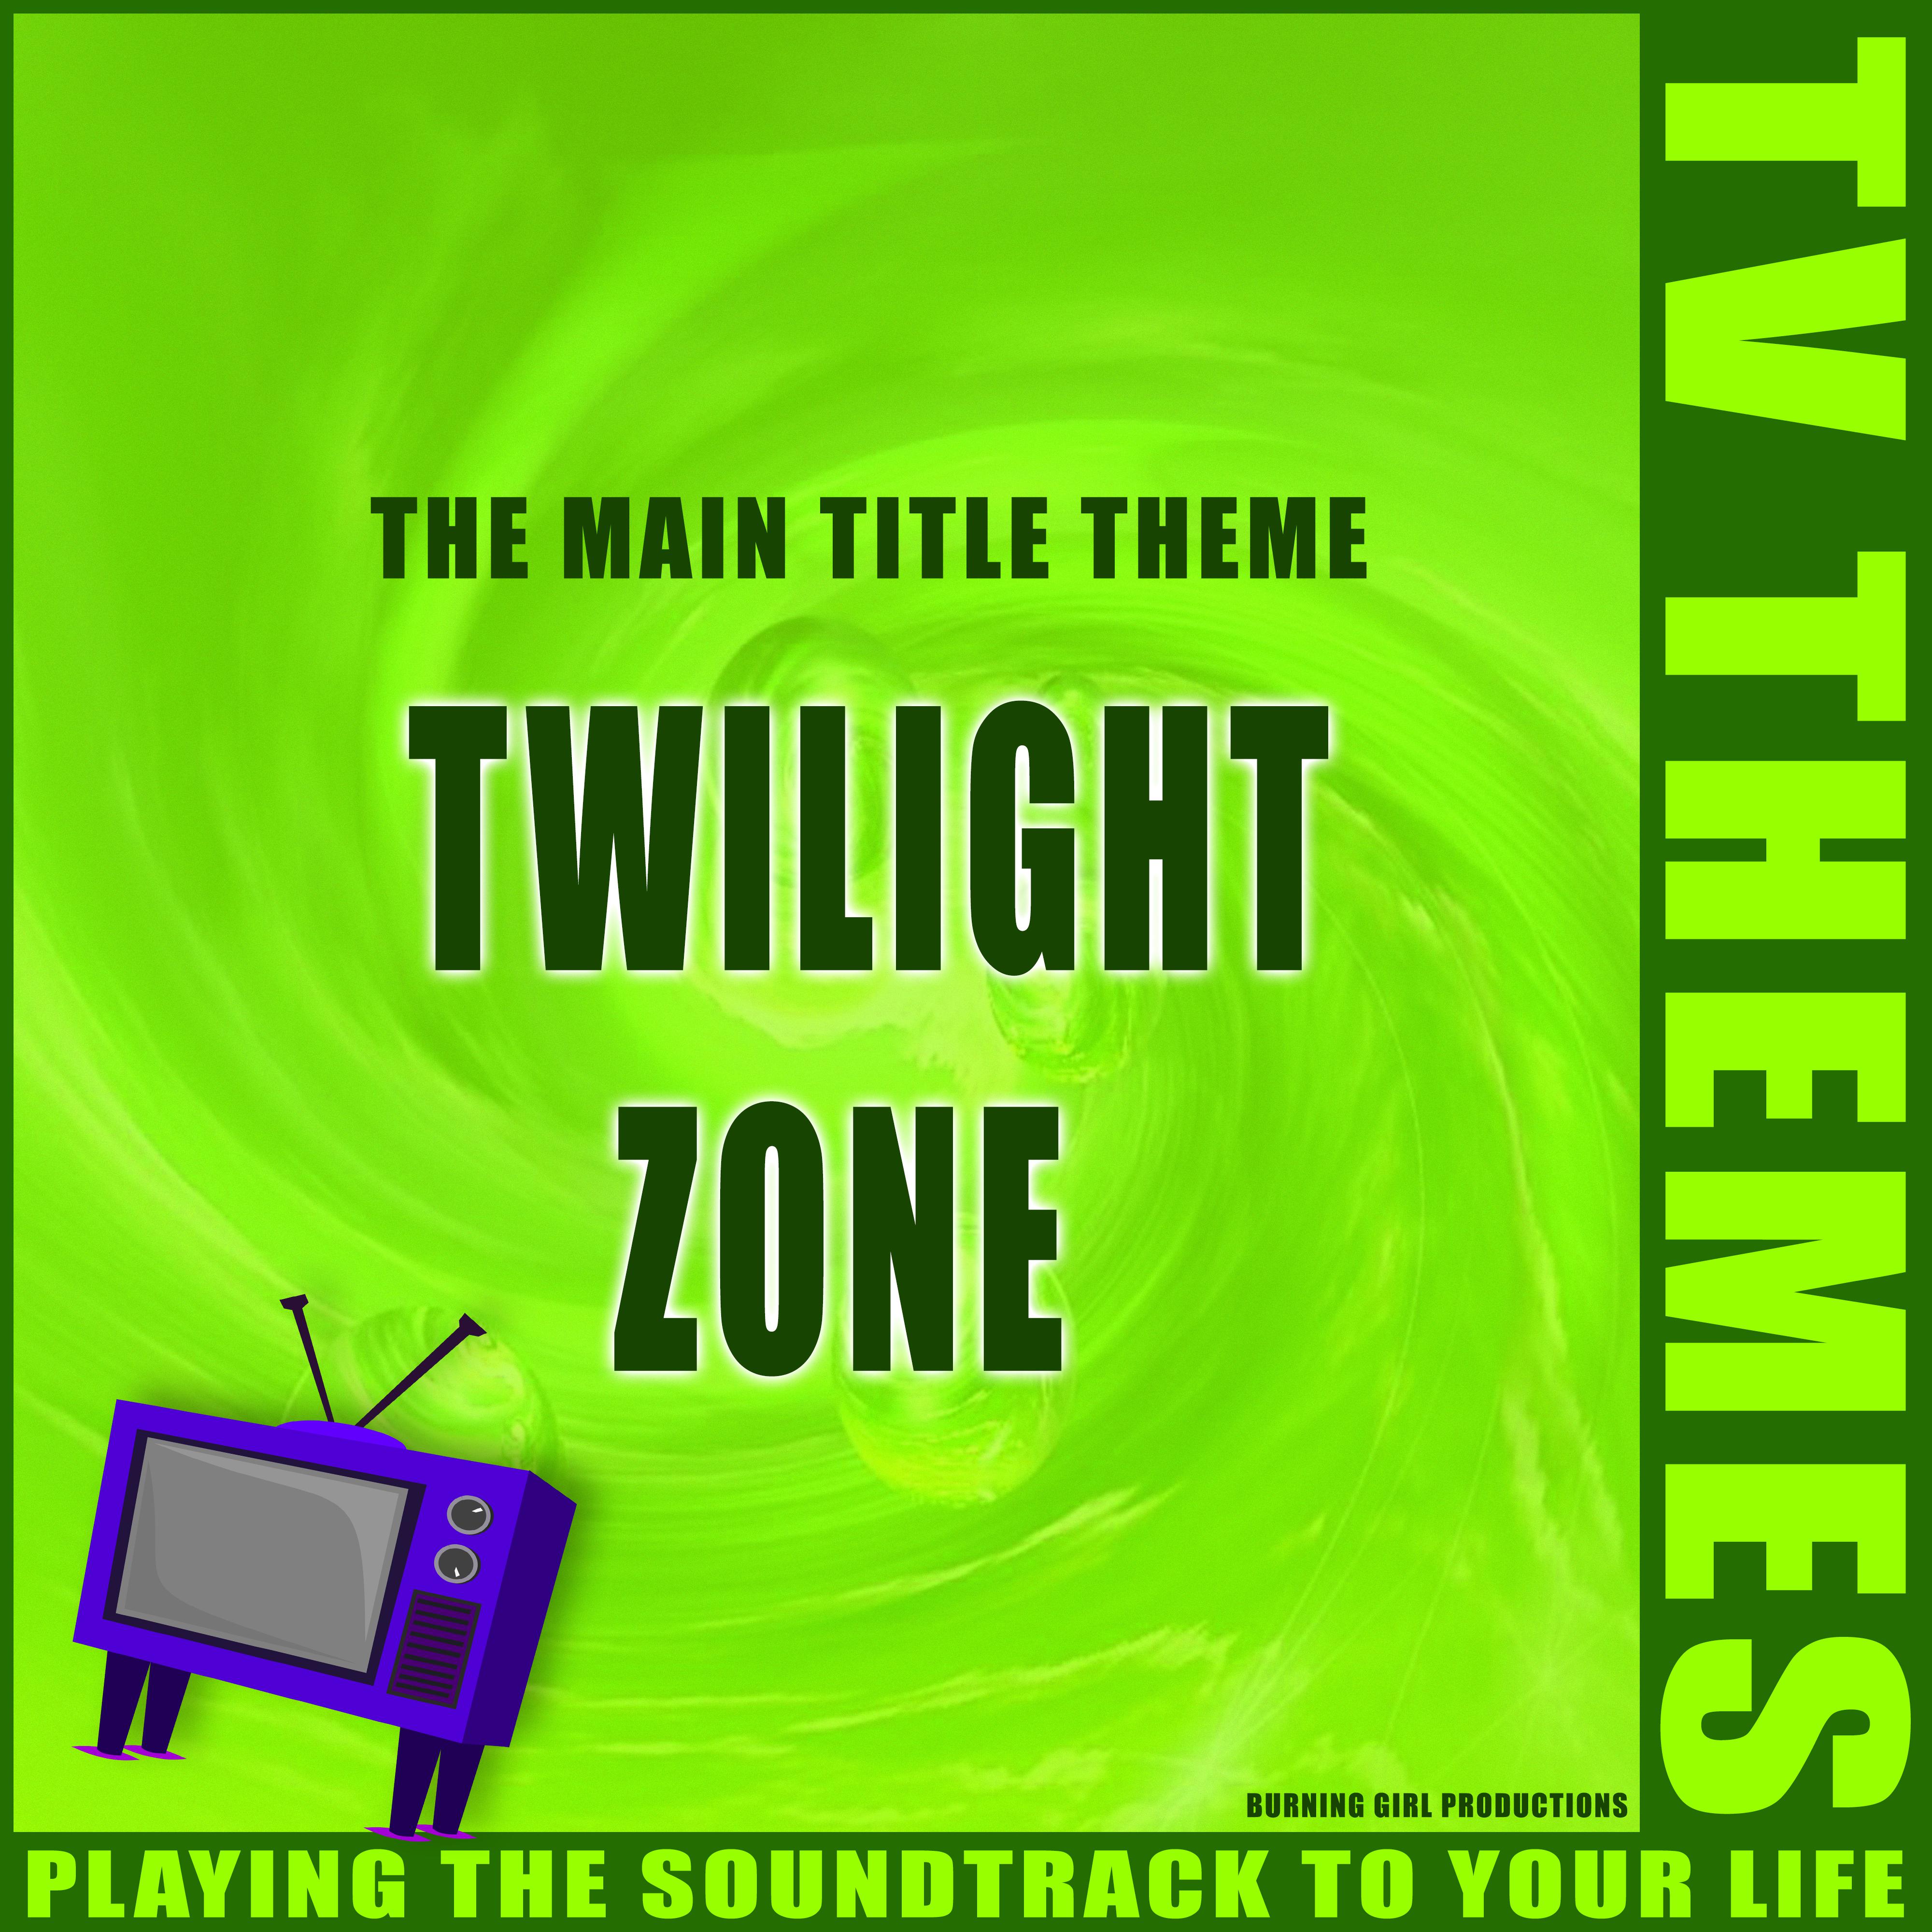 The Main Title Theme - Twilight Zone